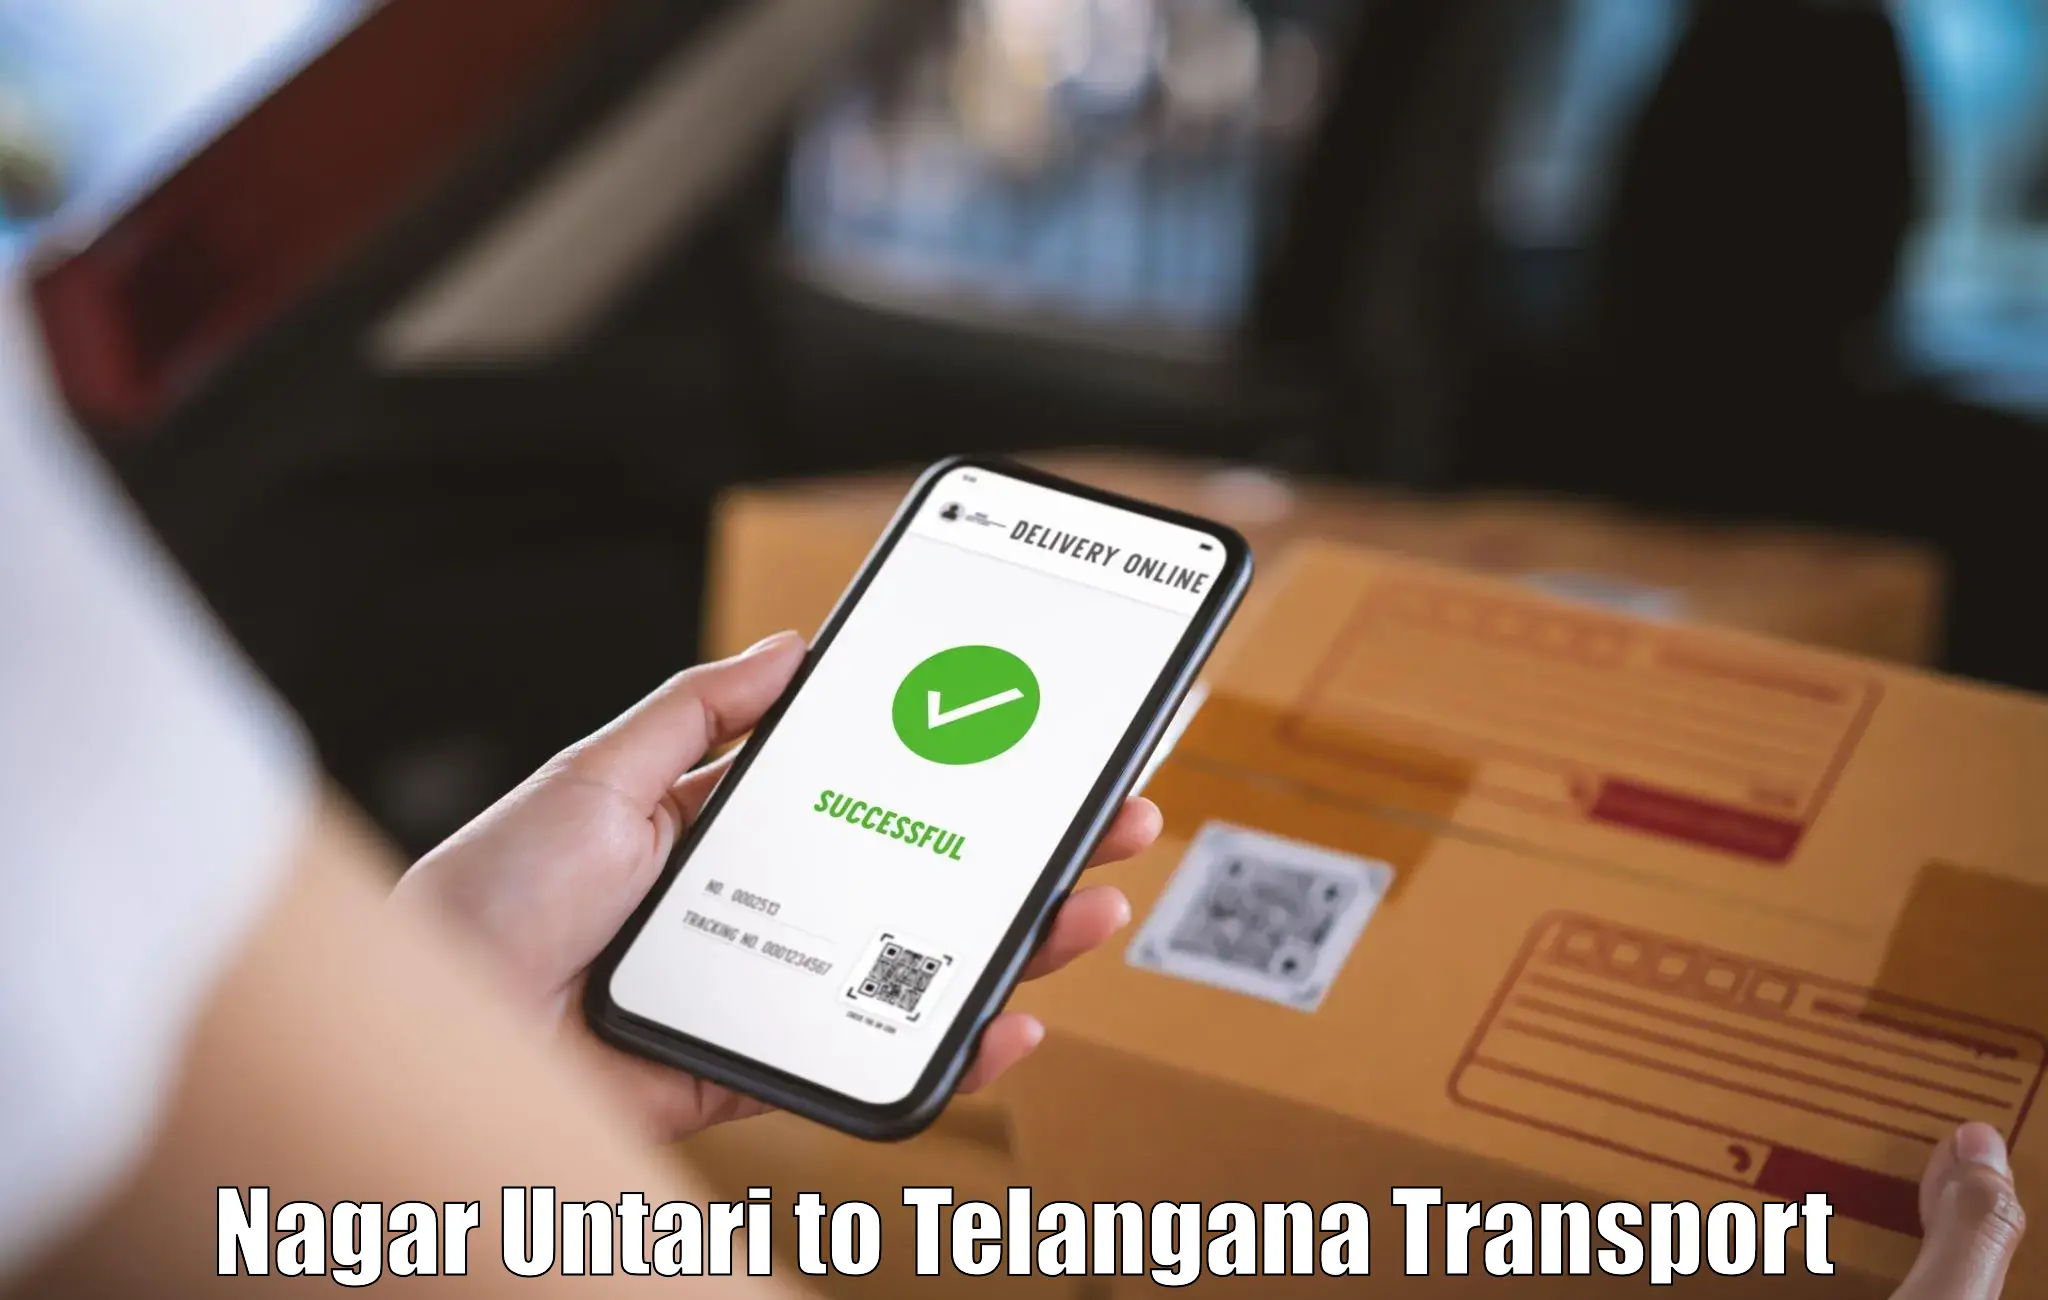 Nearby transport service Nagar Untari to Telangana